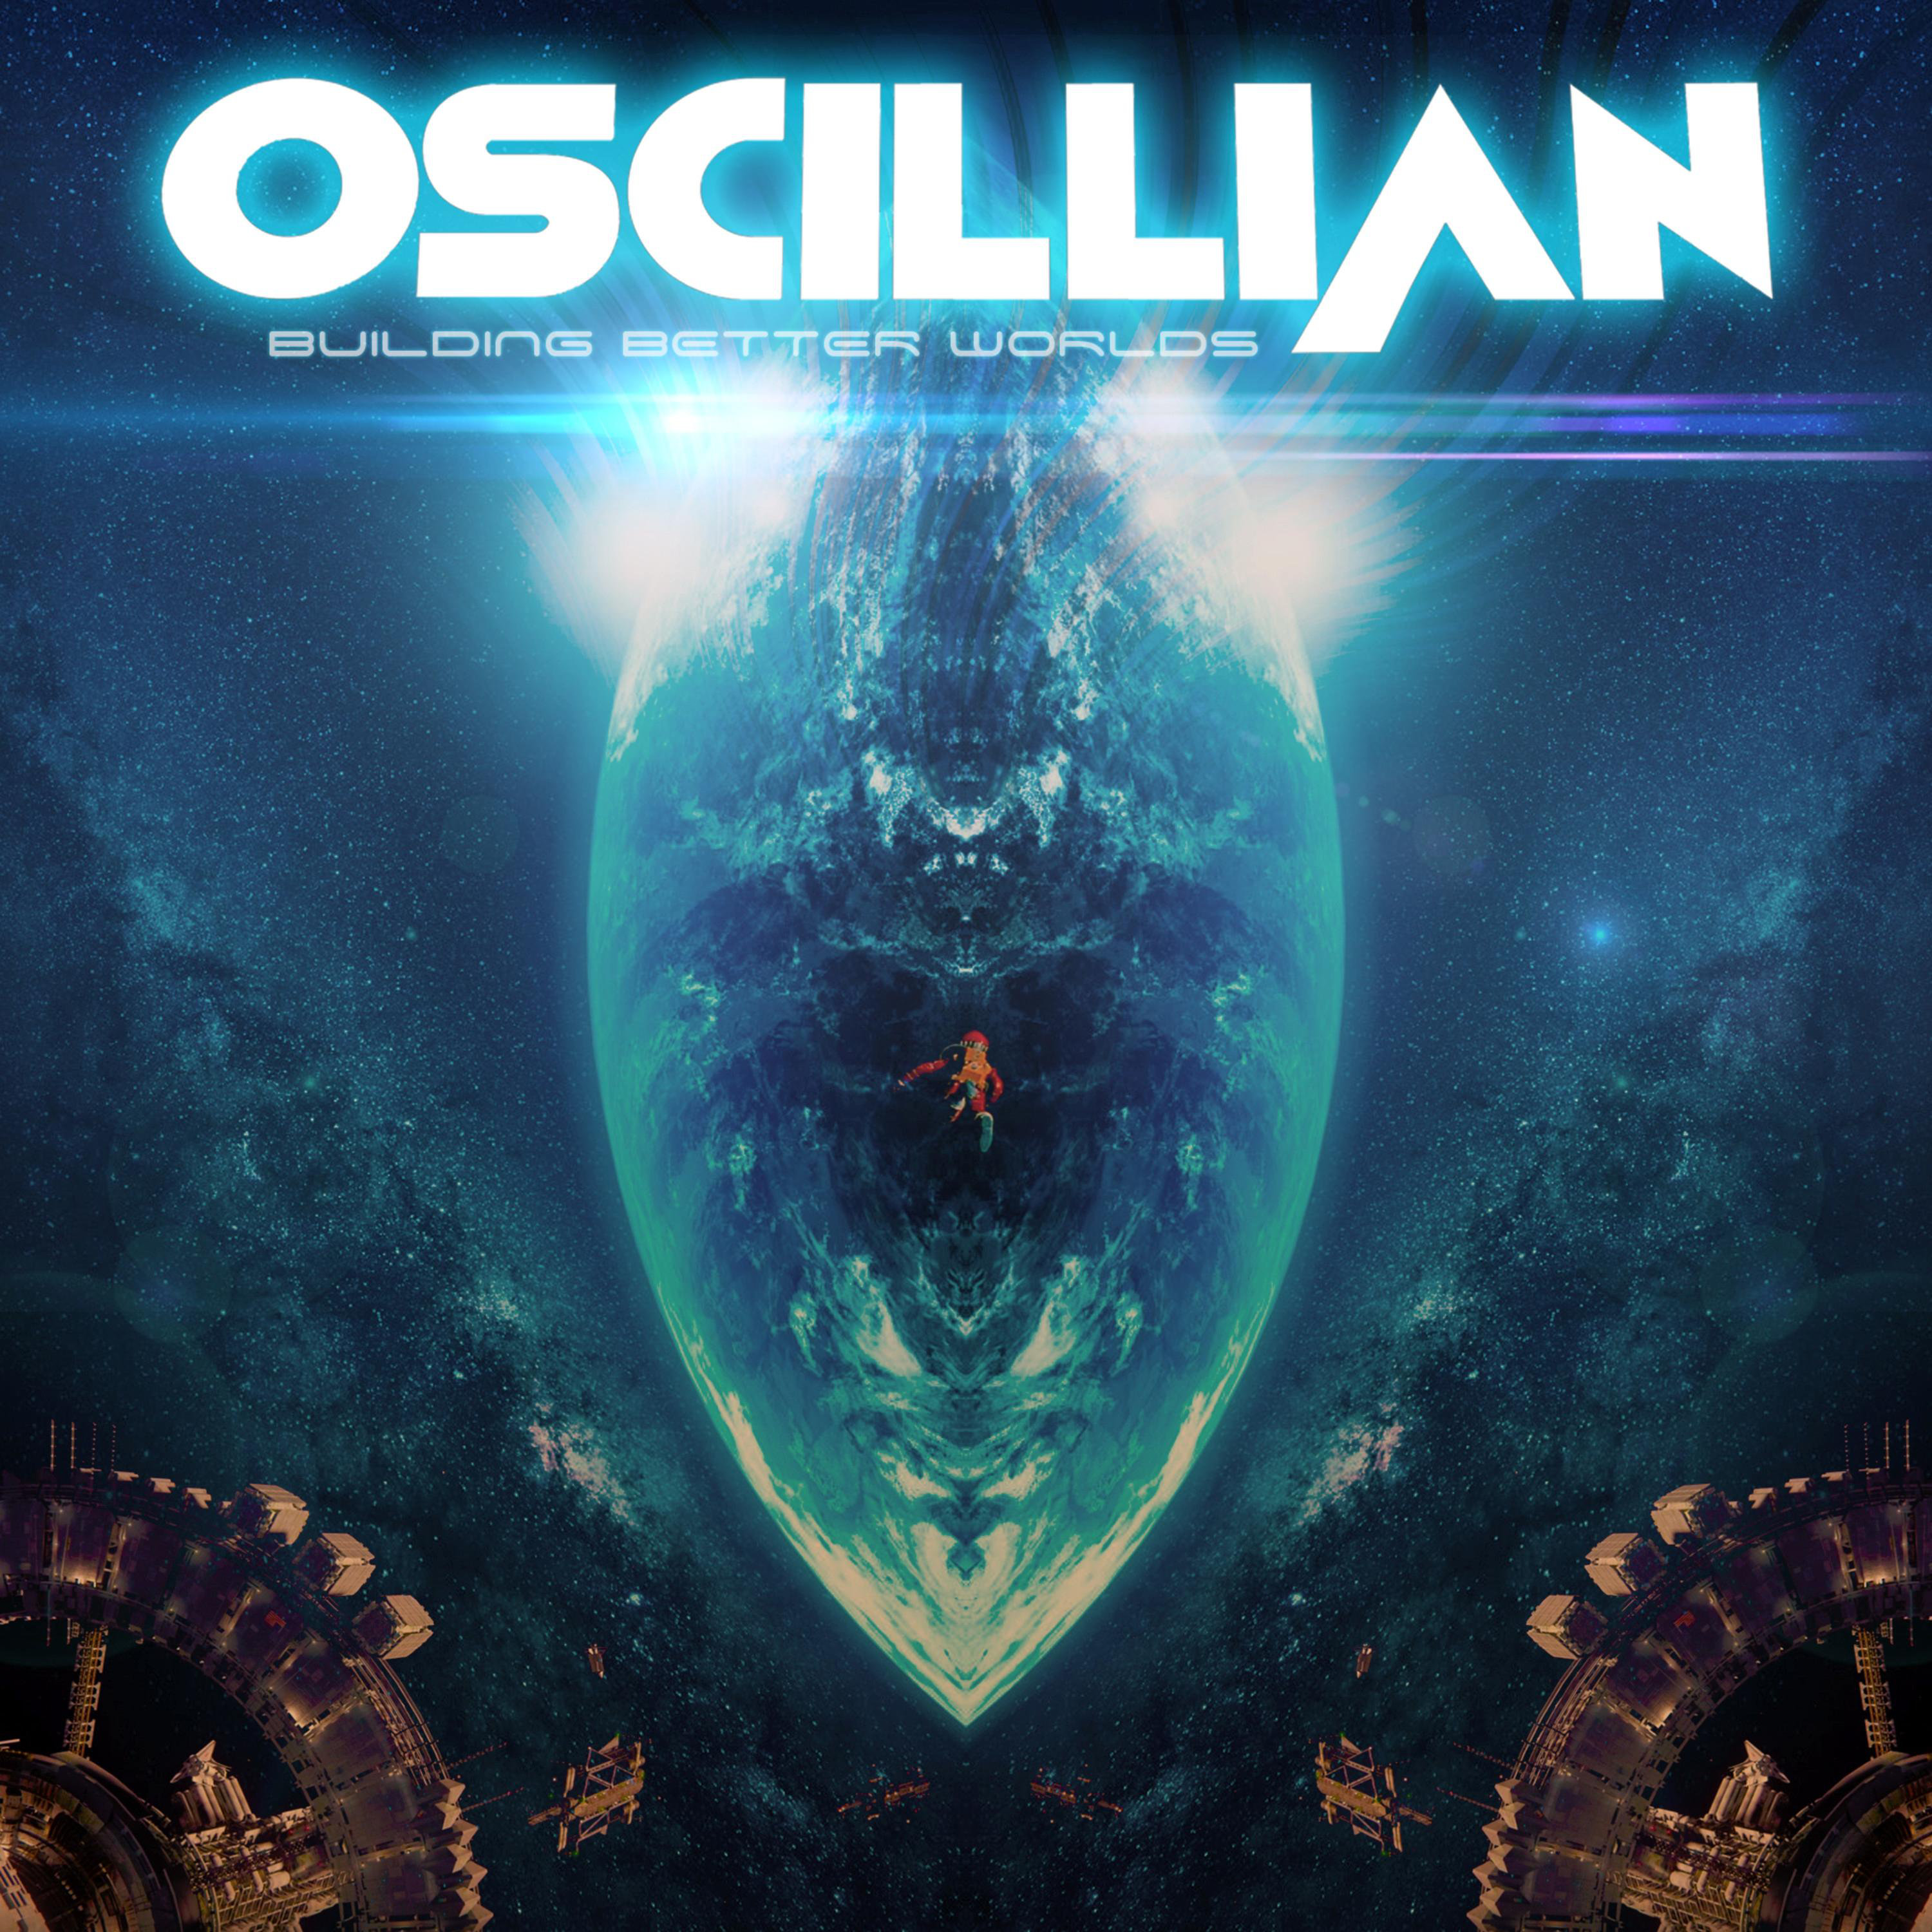 Building better worlds. Oscillian. Activate Oscillian. Attack ships on Fire Oscillian. Oscillian-ad-Astra.